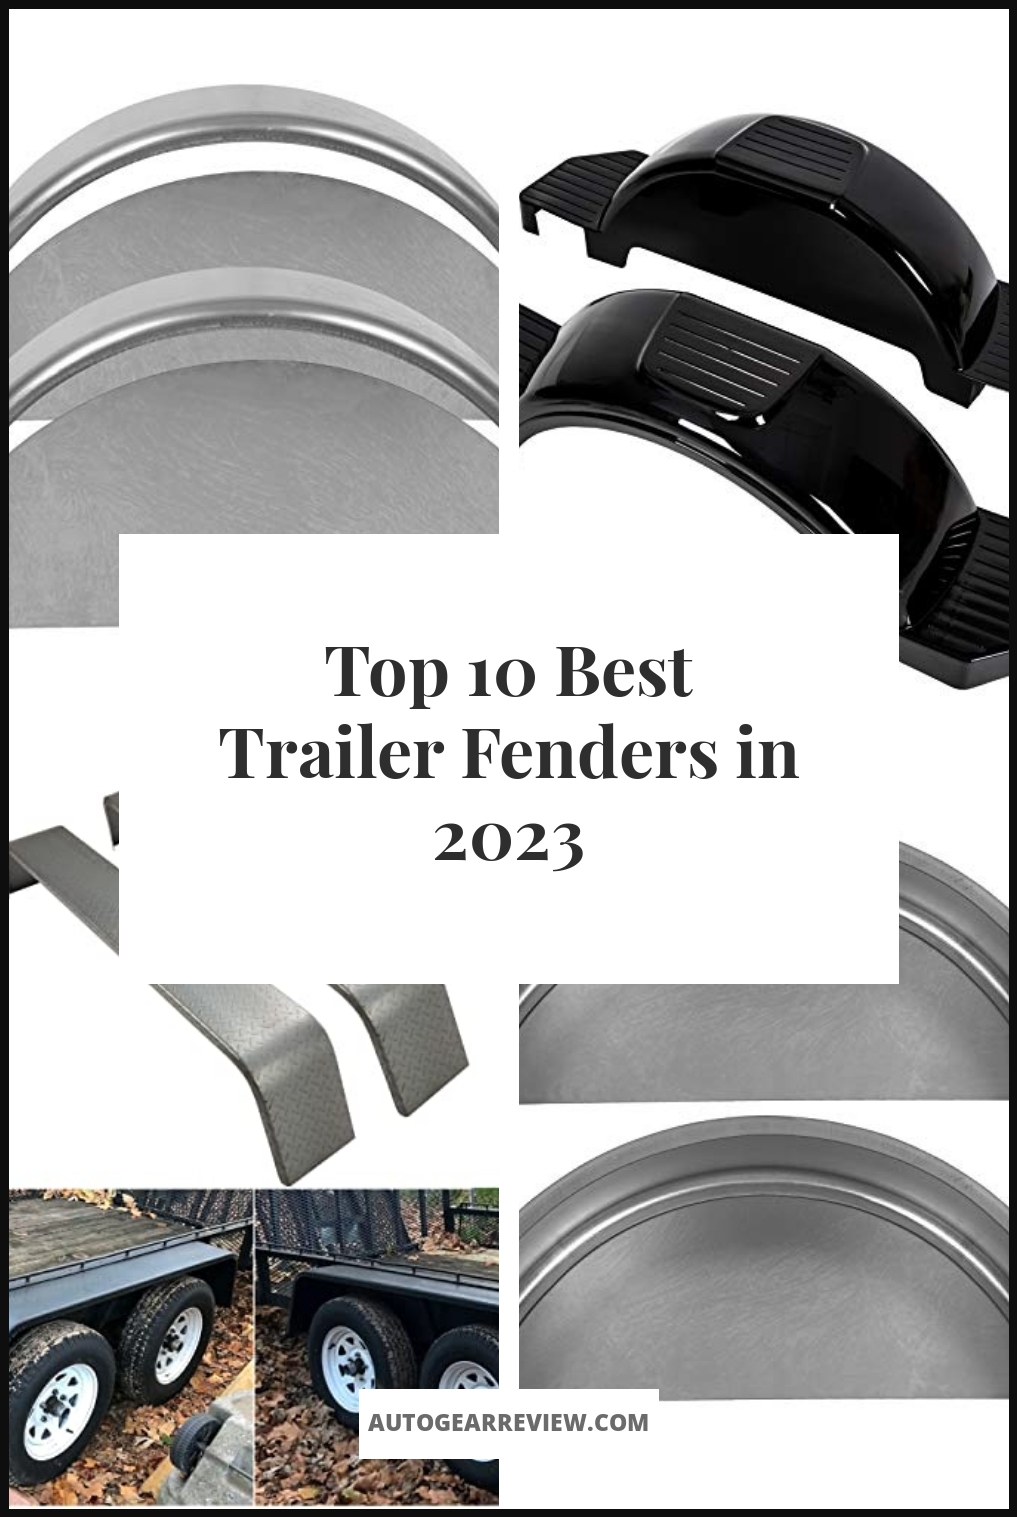 Best Trailer Fenders - Buying Guide